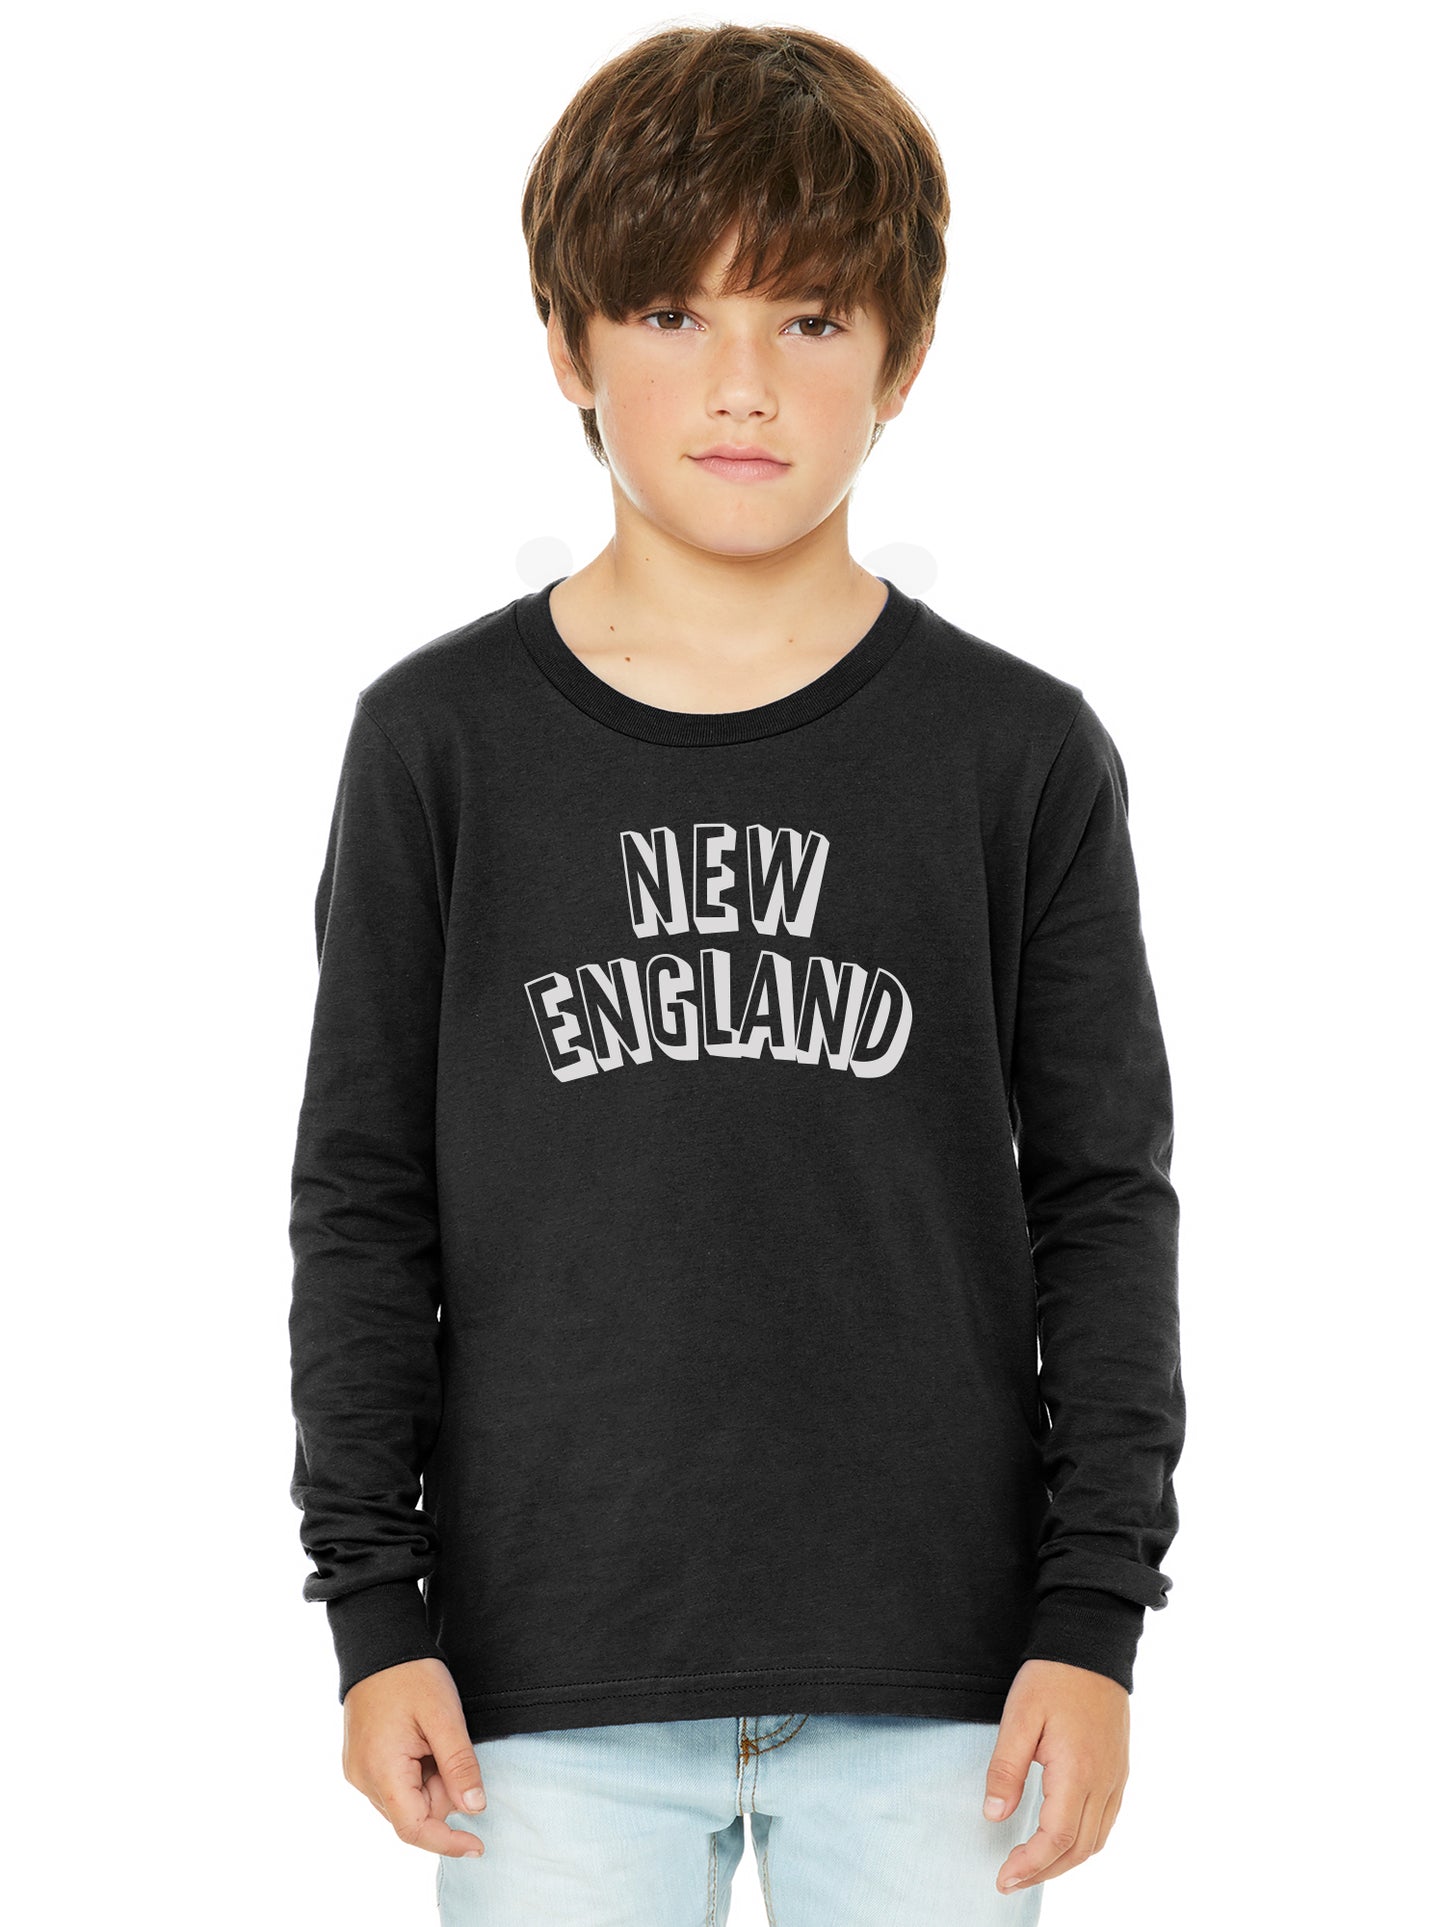 Daxton Youth Long Sleeve New England Basic Tshirt